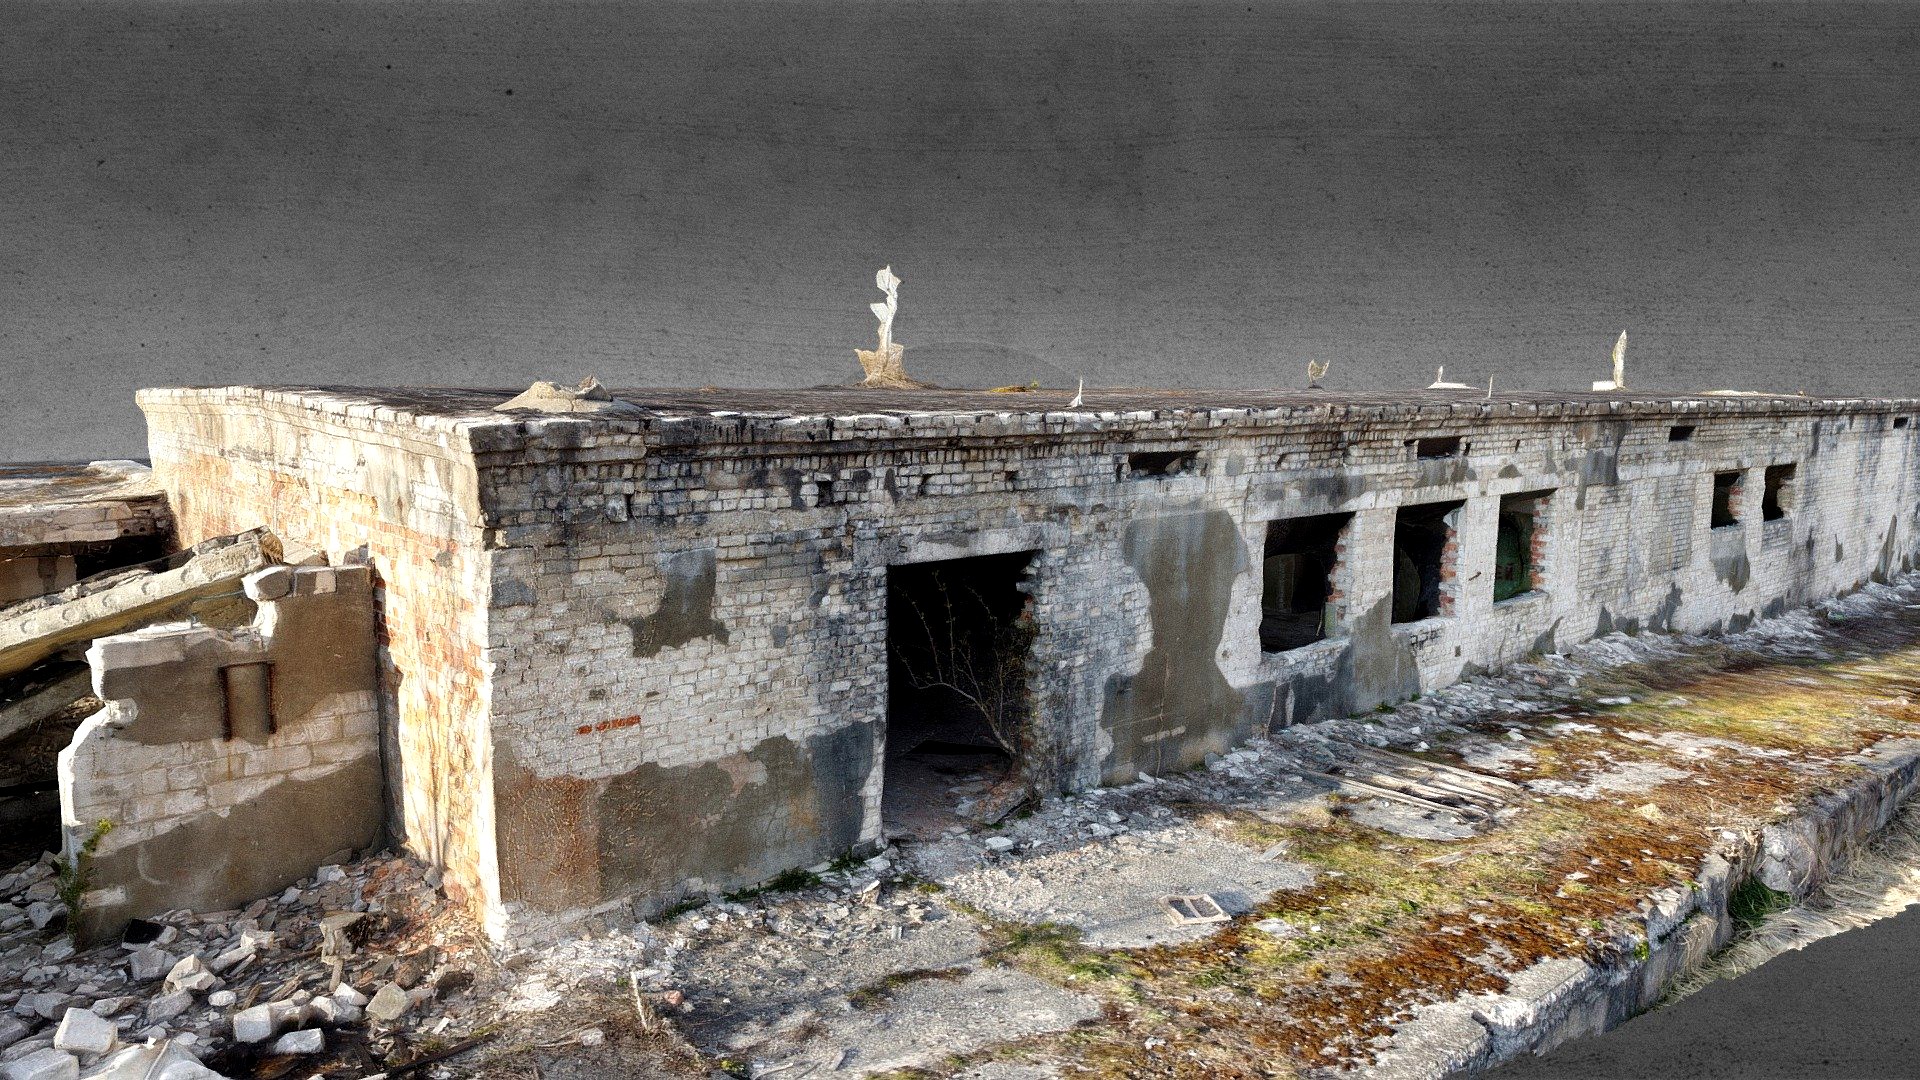 Abandoned Brick Building